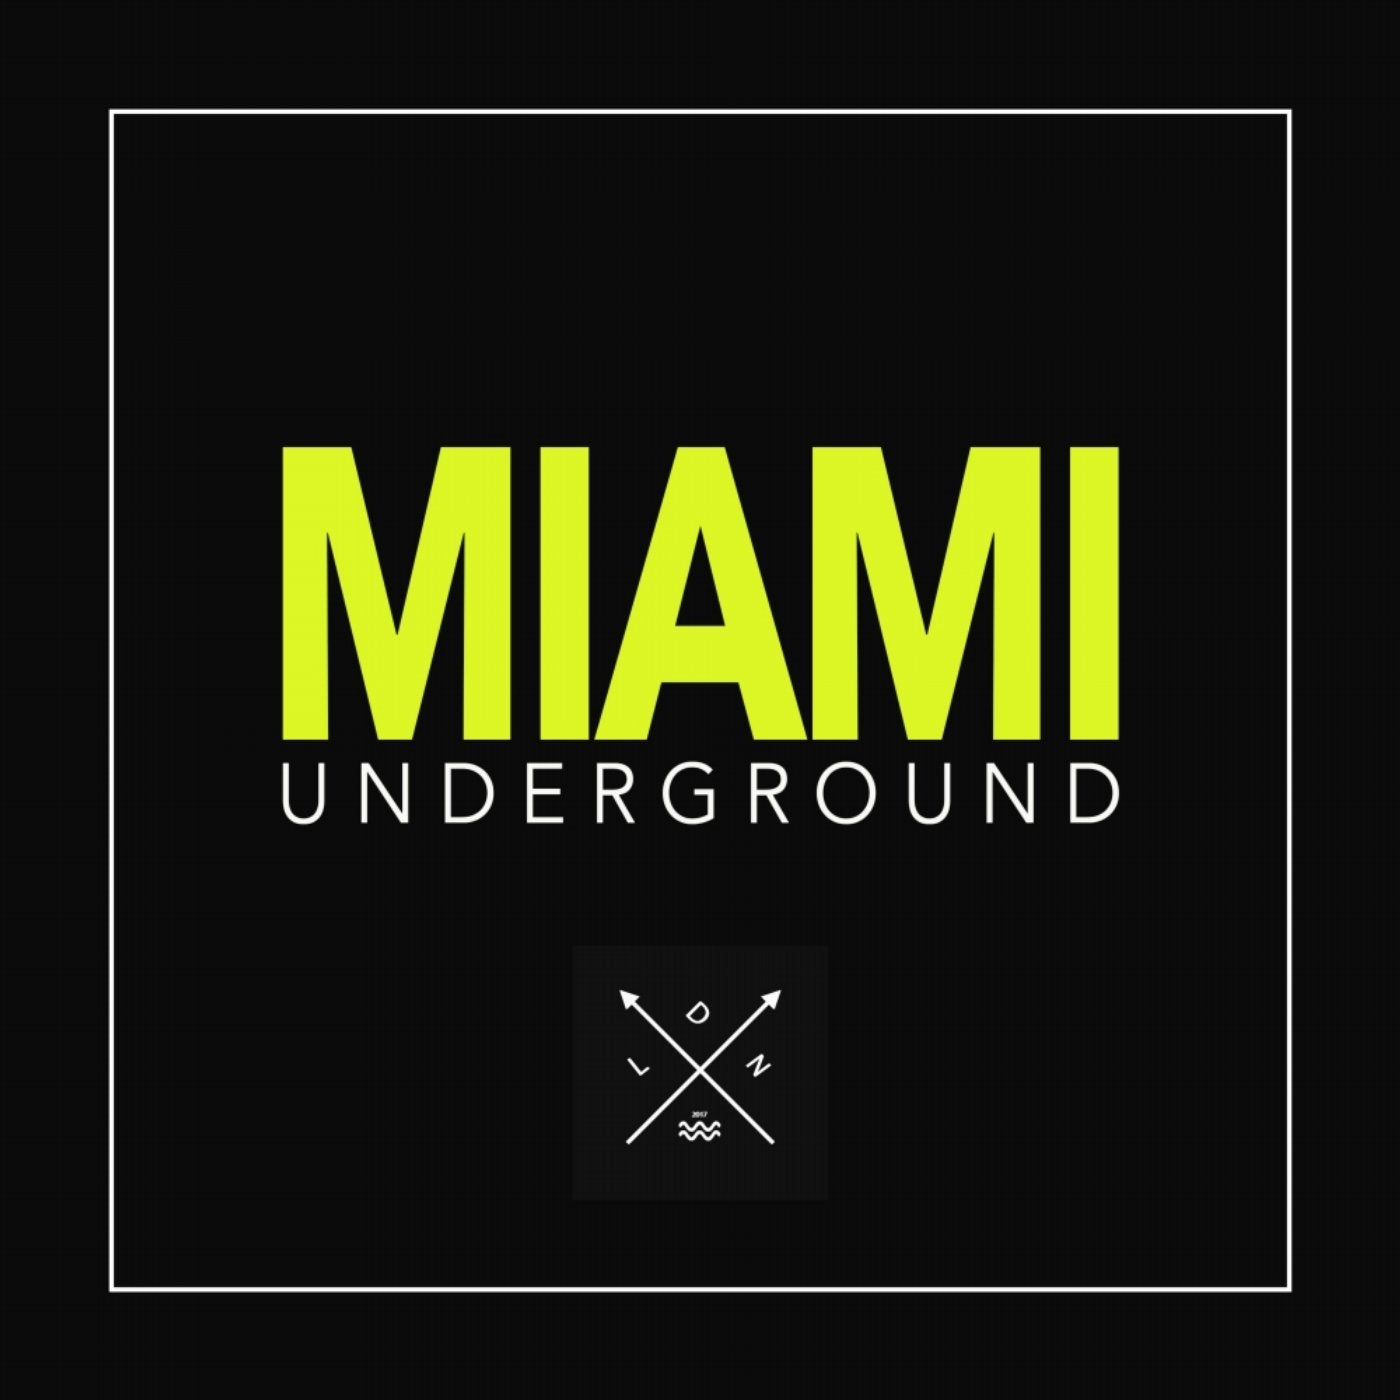 Miami Underground